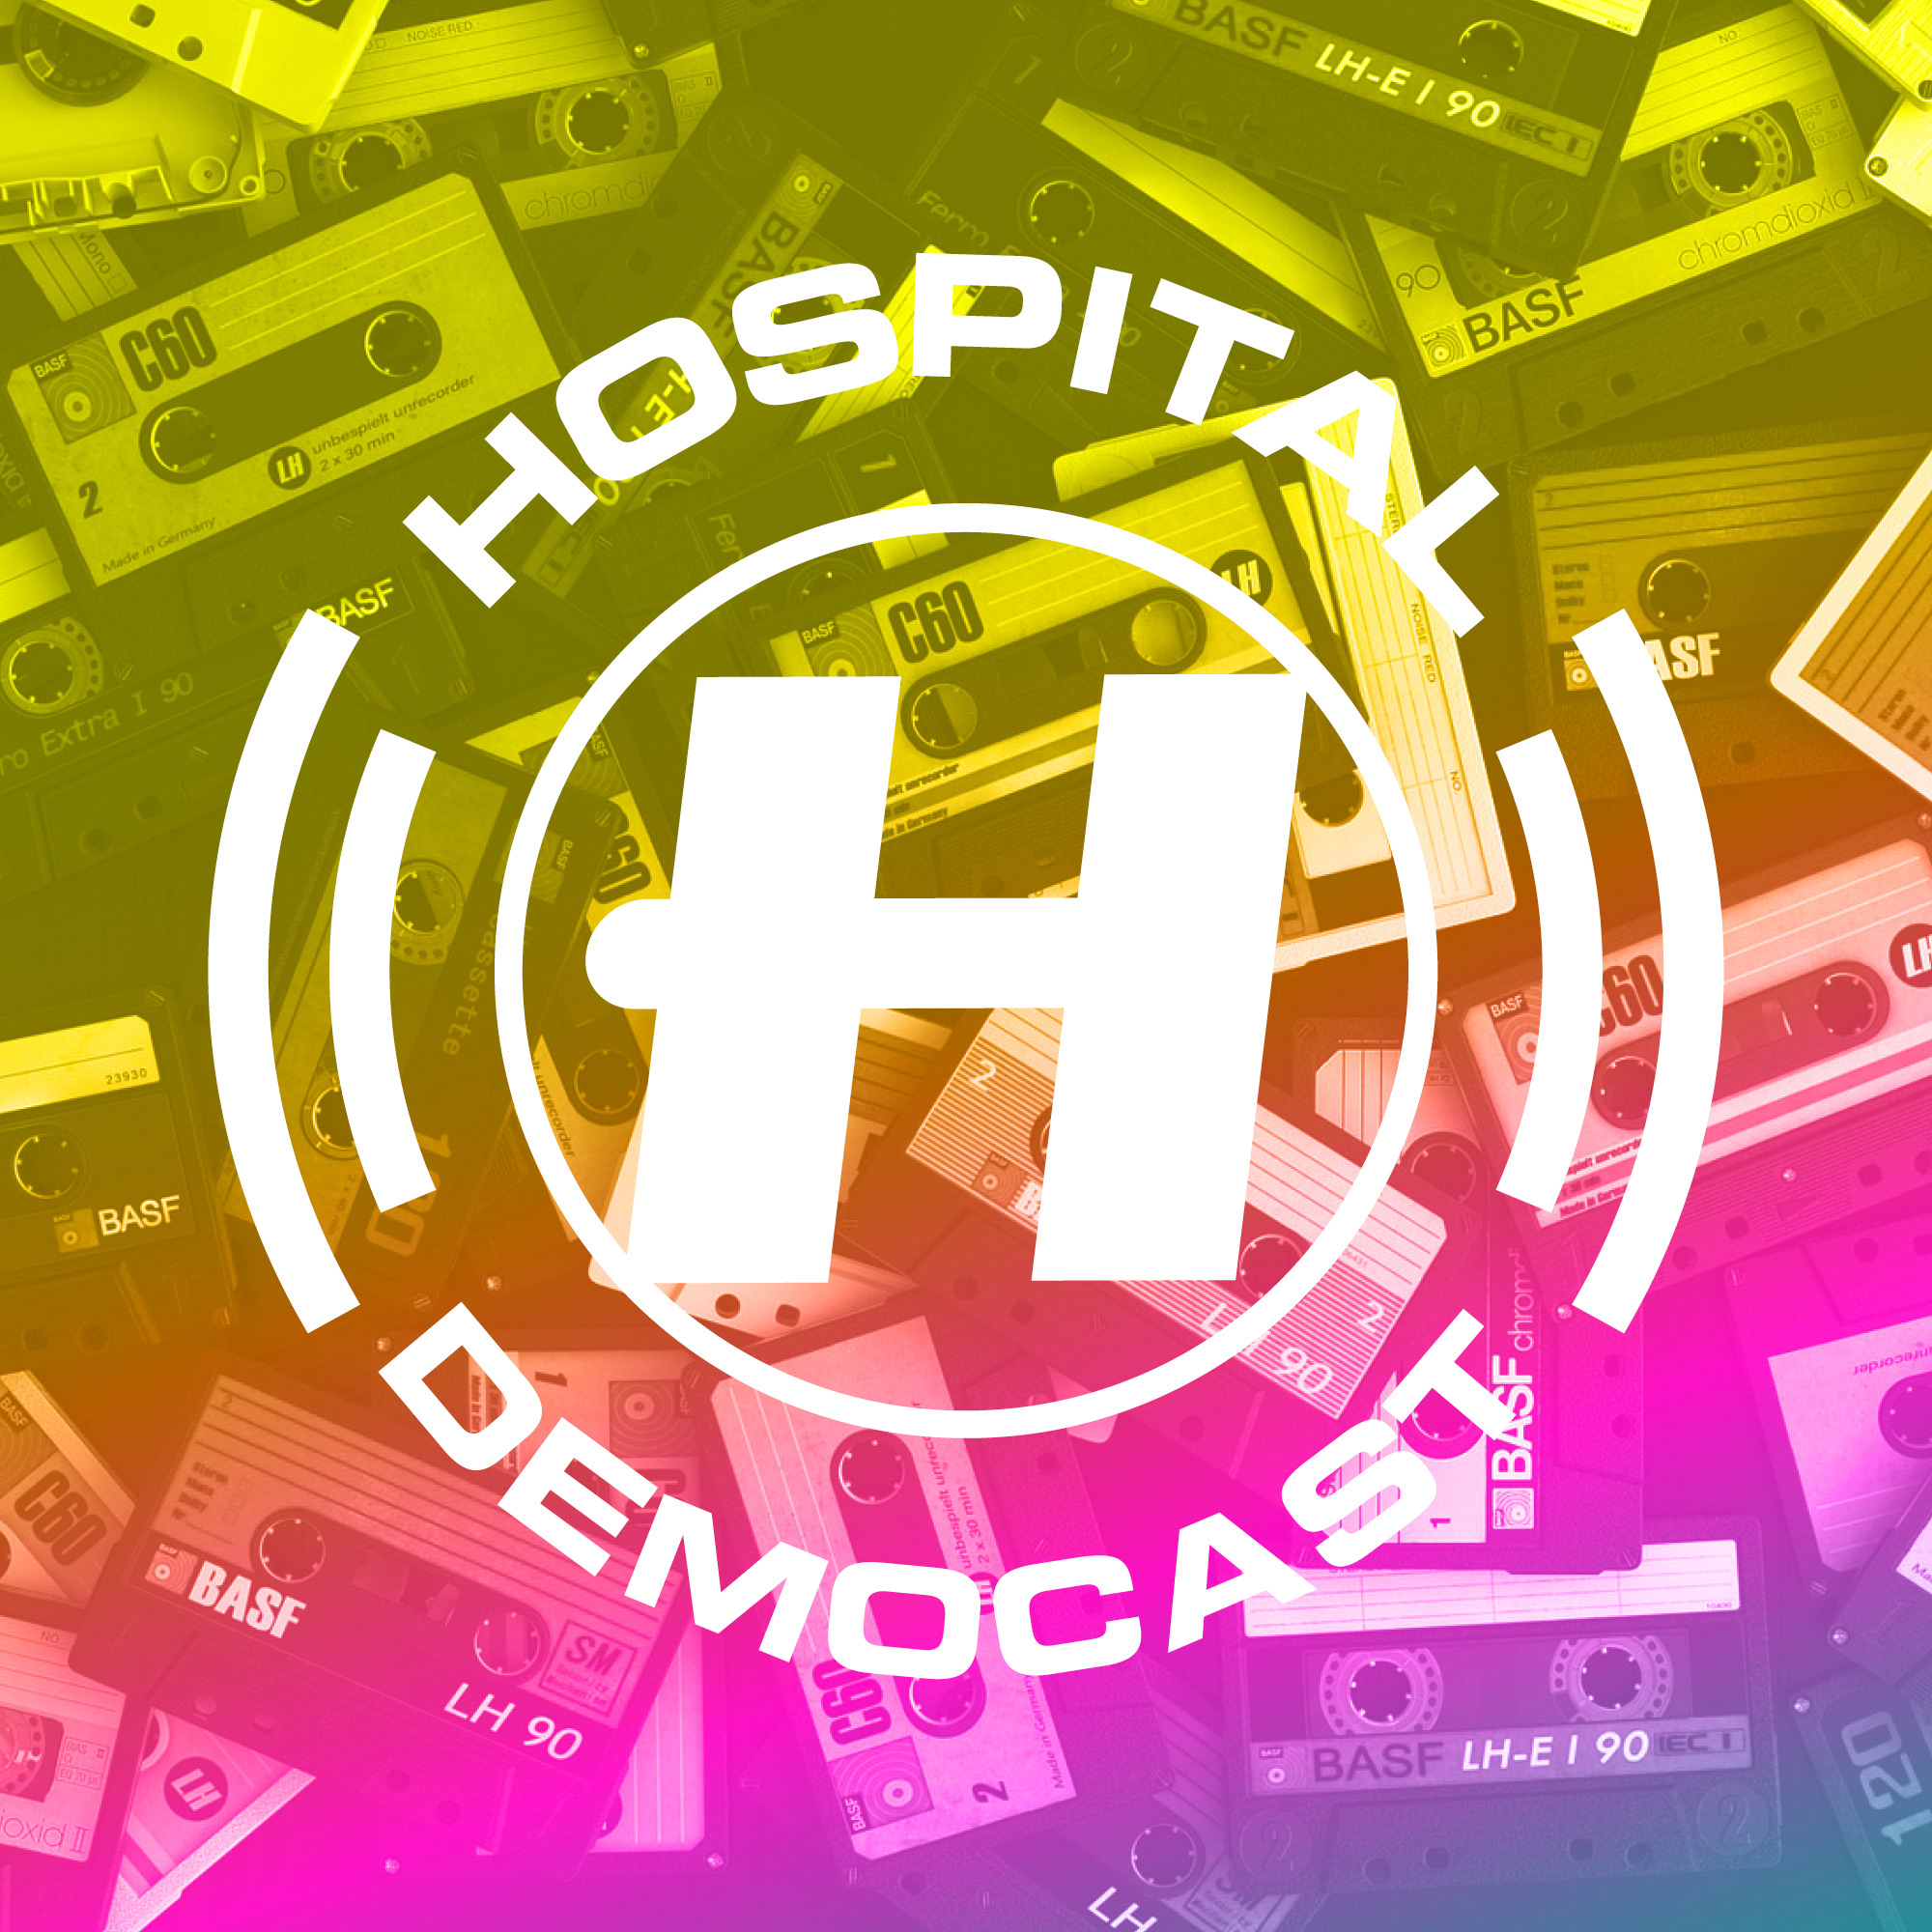 Hospital Democast (Jan 2019) Artwork